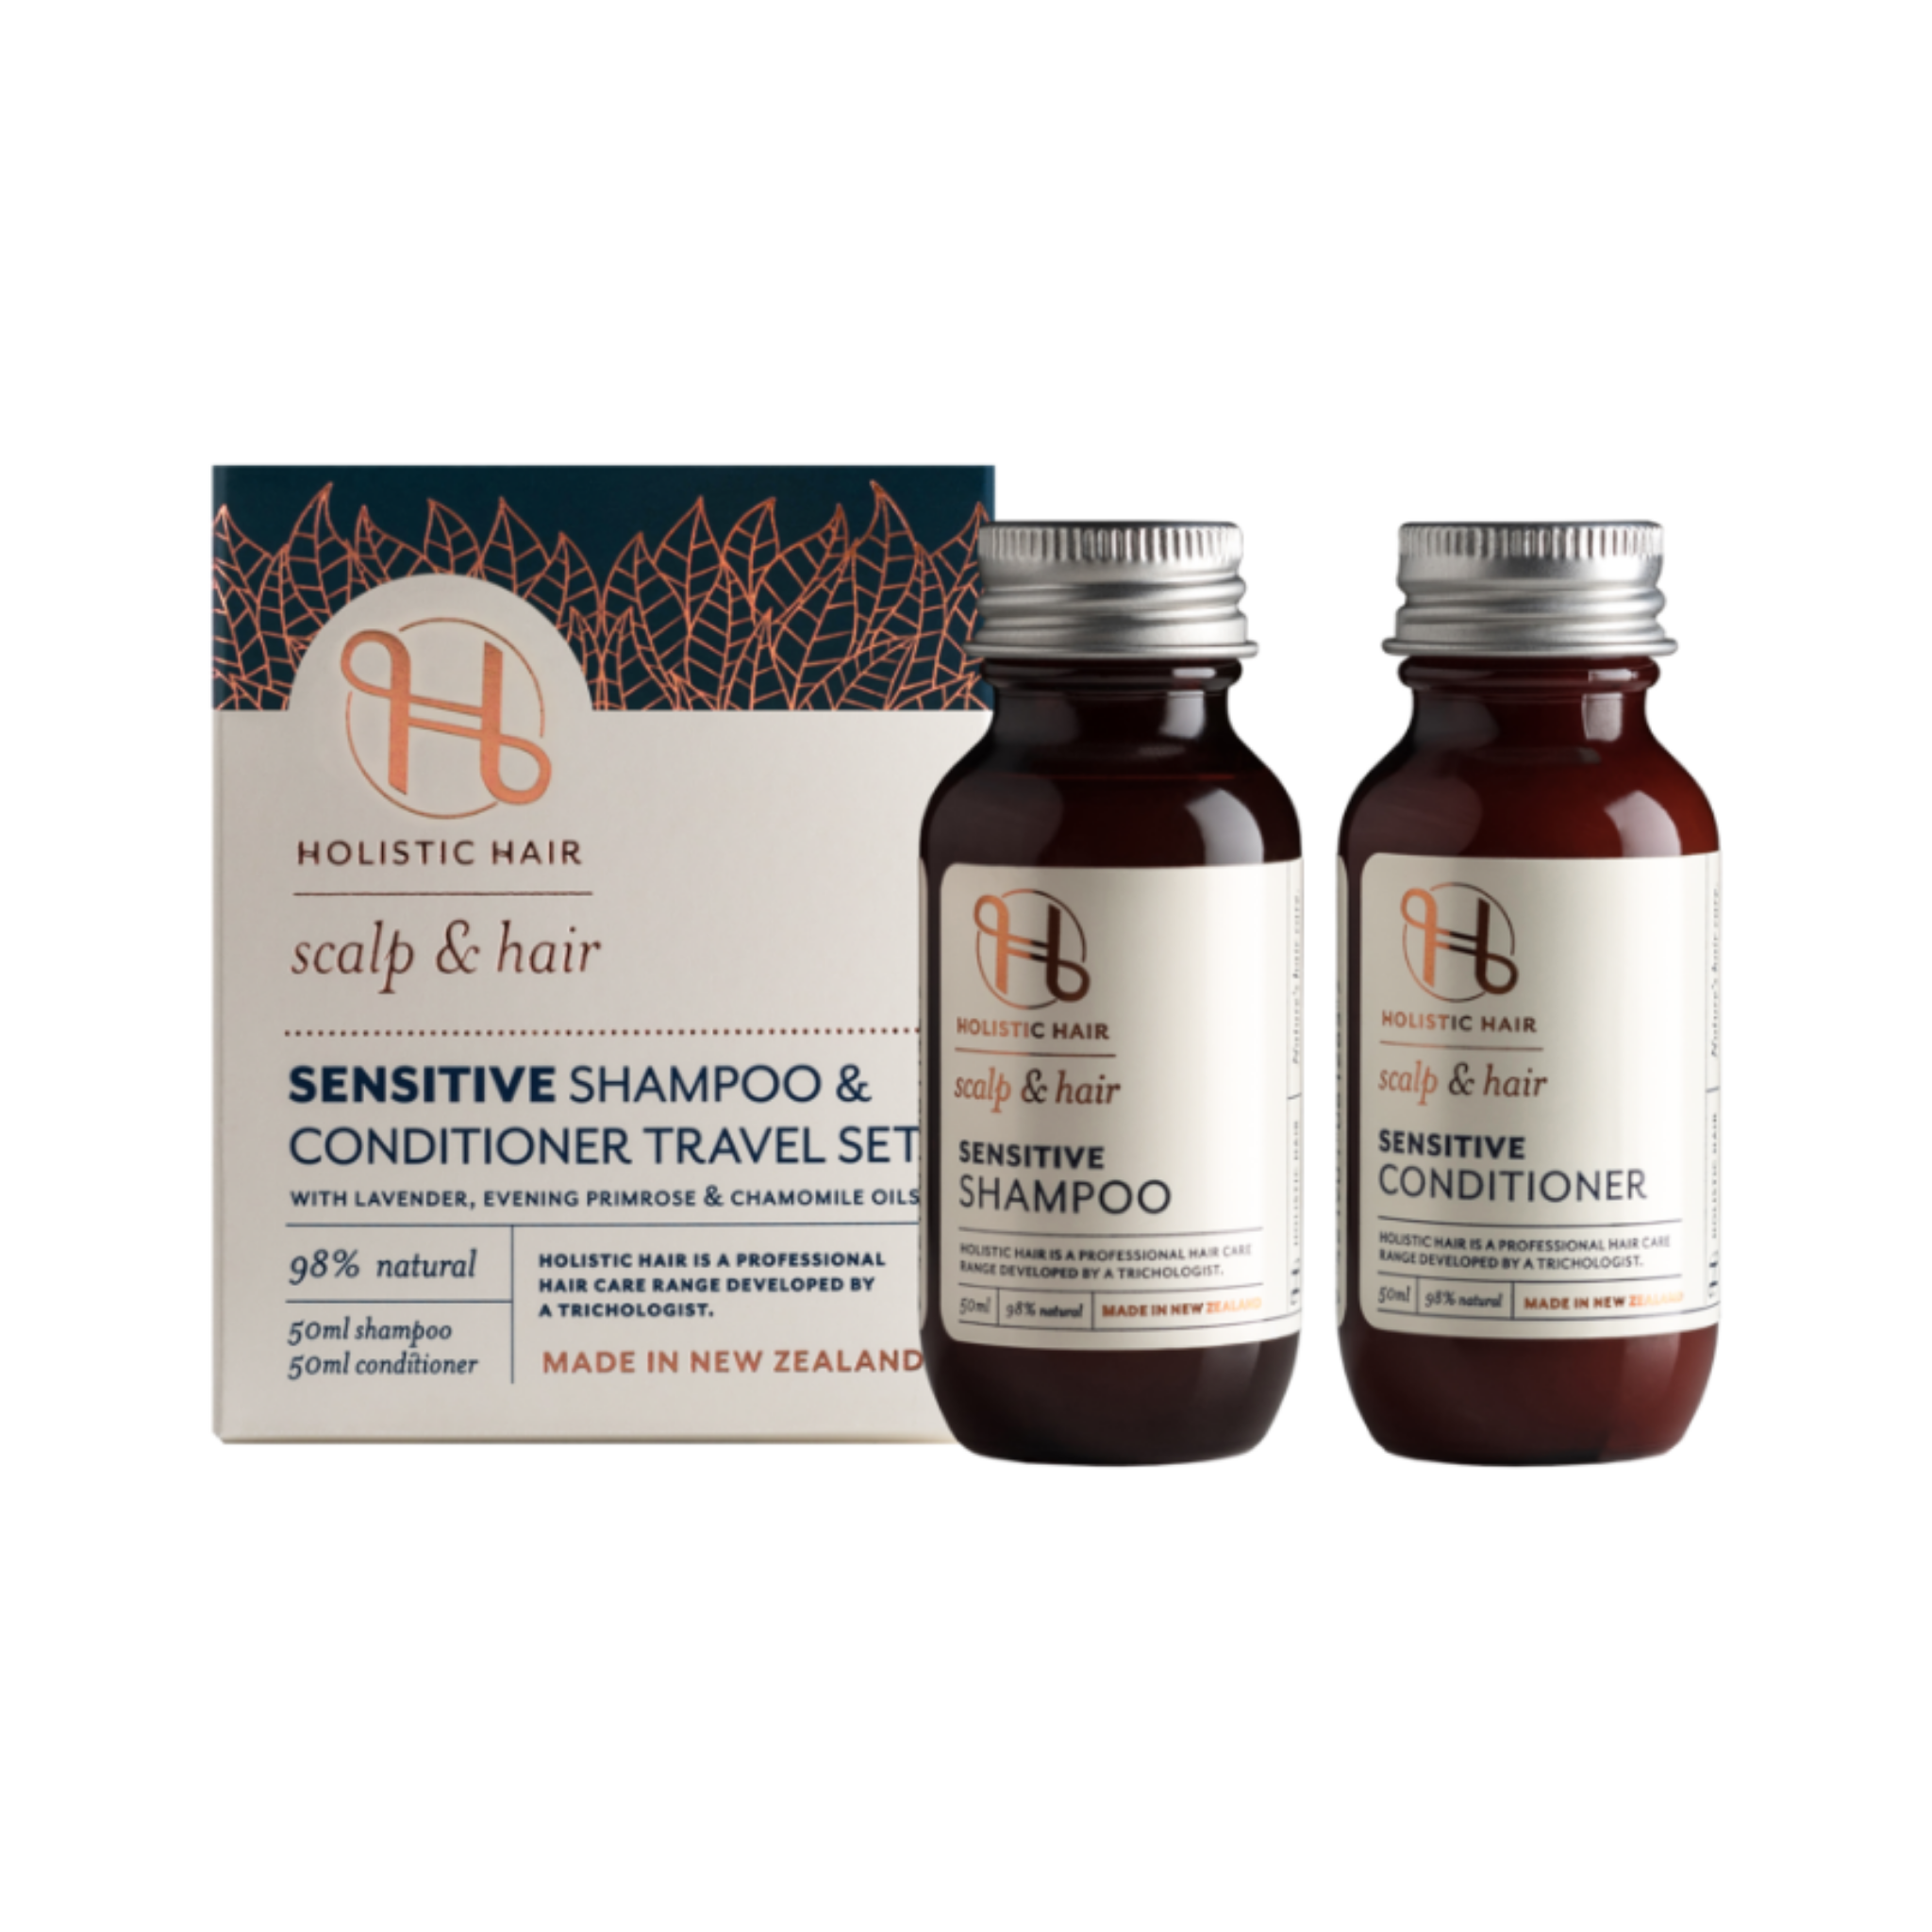 Holistic Hair Sensitive Shampoo and Conditioner Travel Set